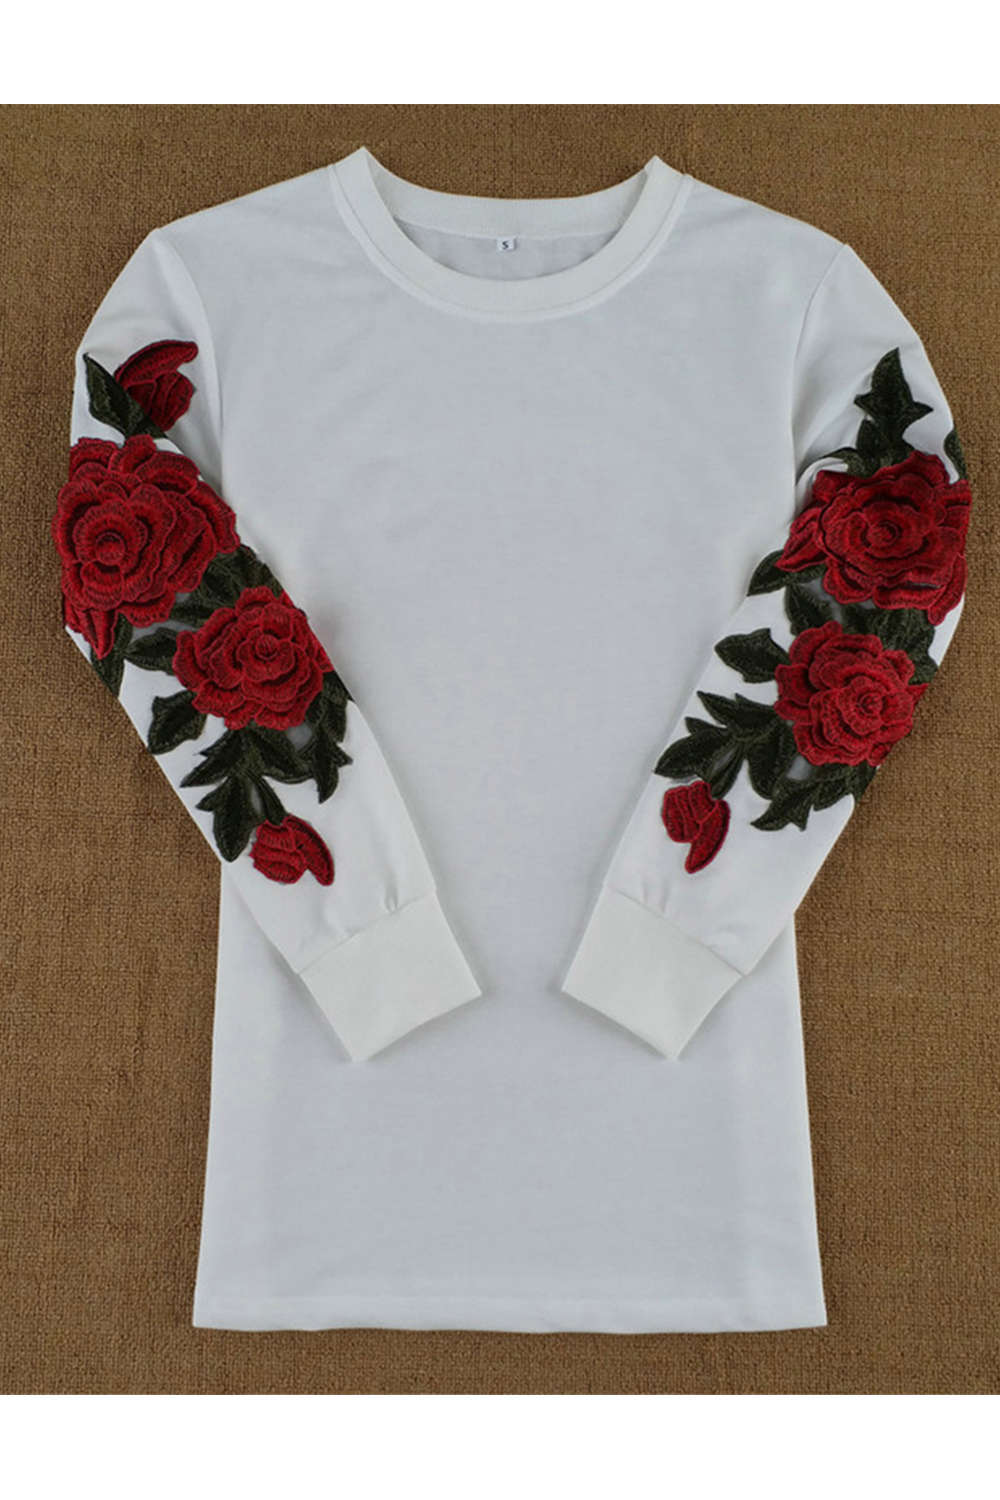 Iyasson Rose Embroidered Long Sleeve Sweatshirt